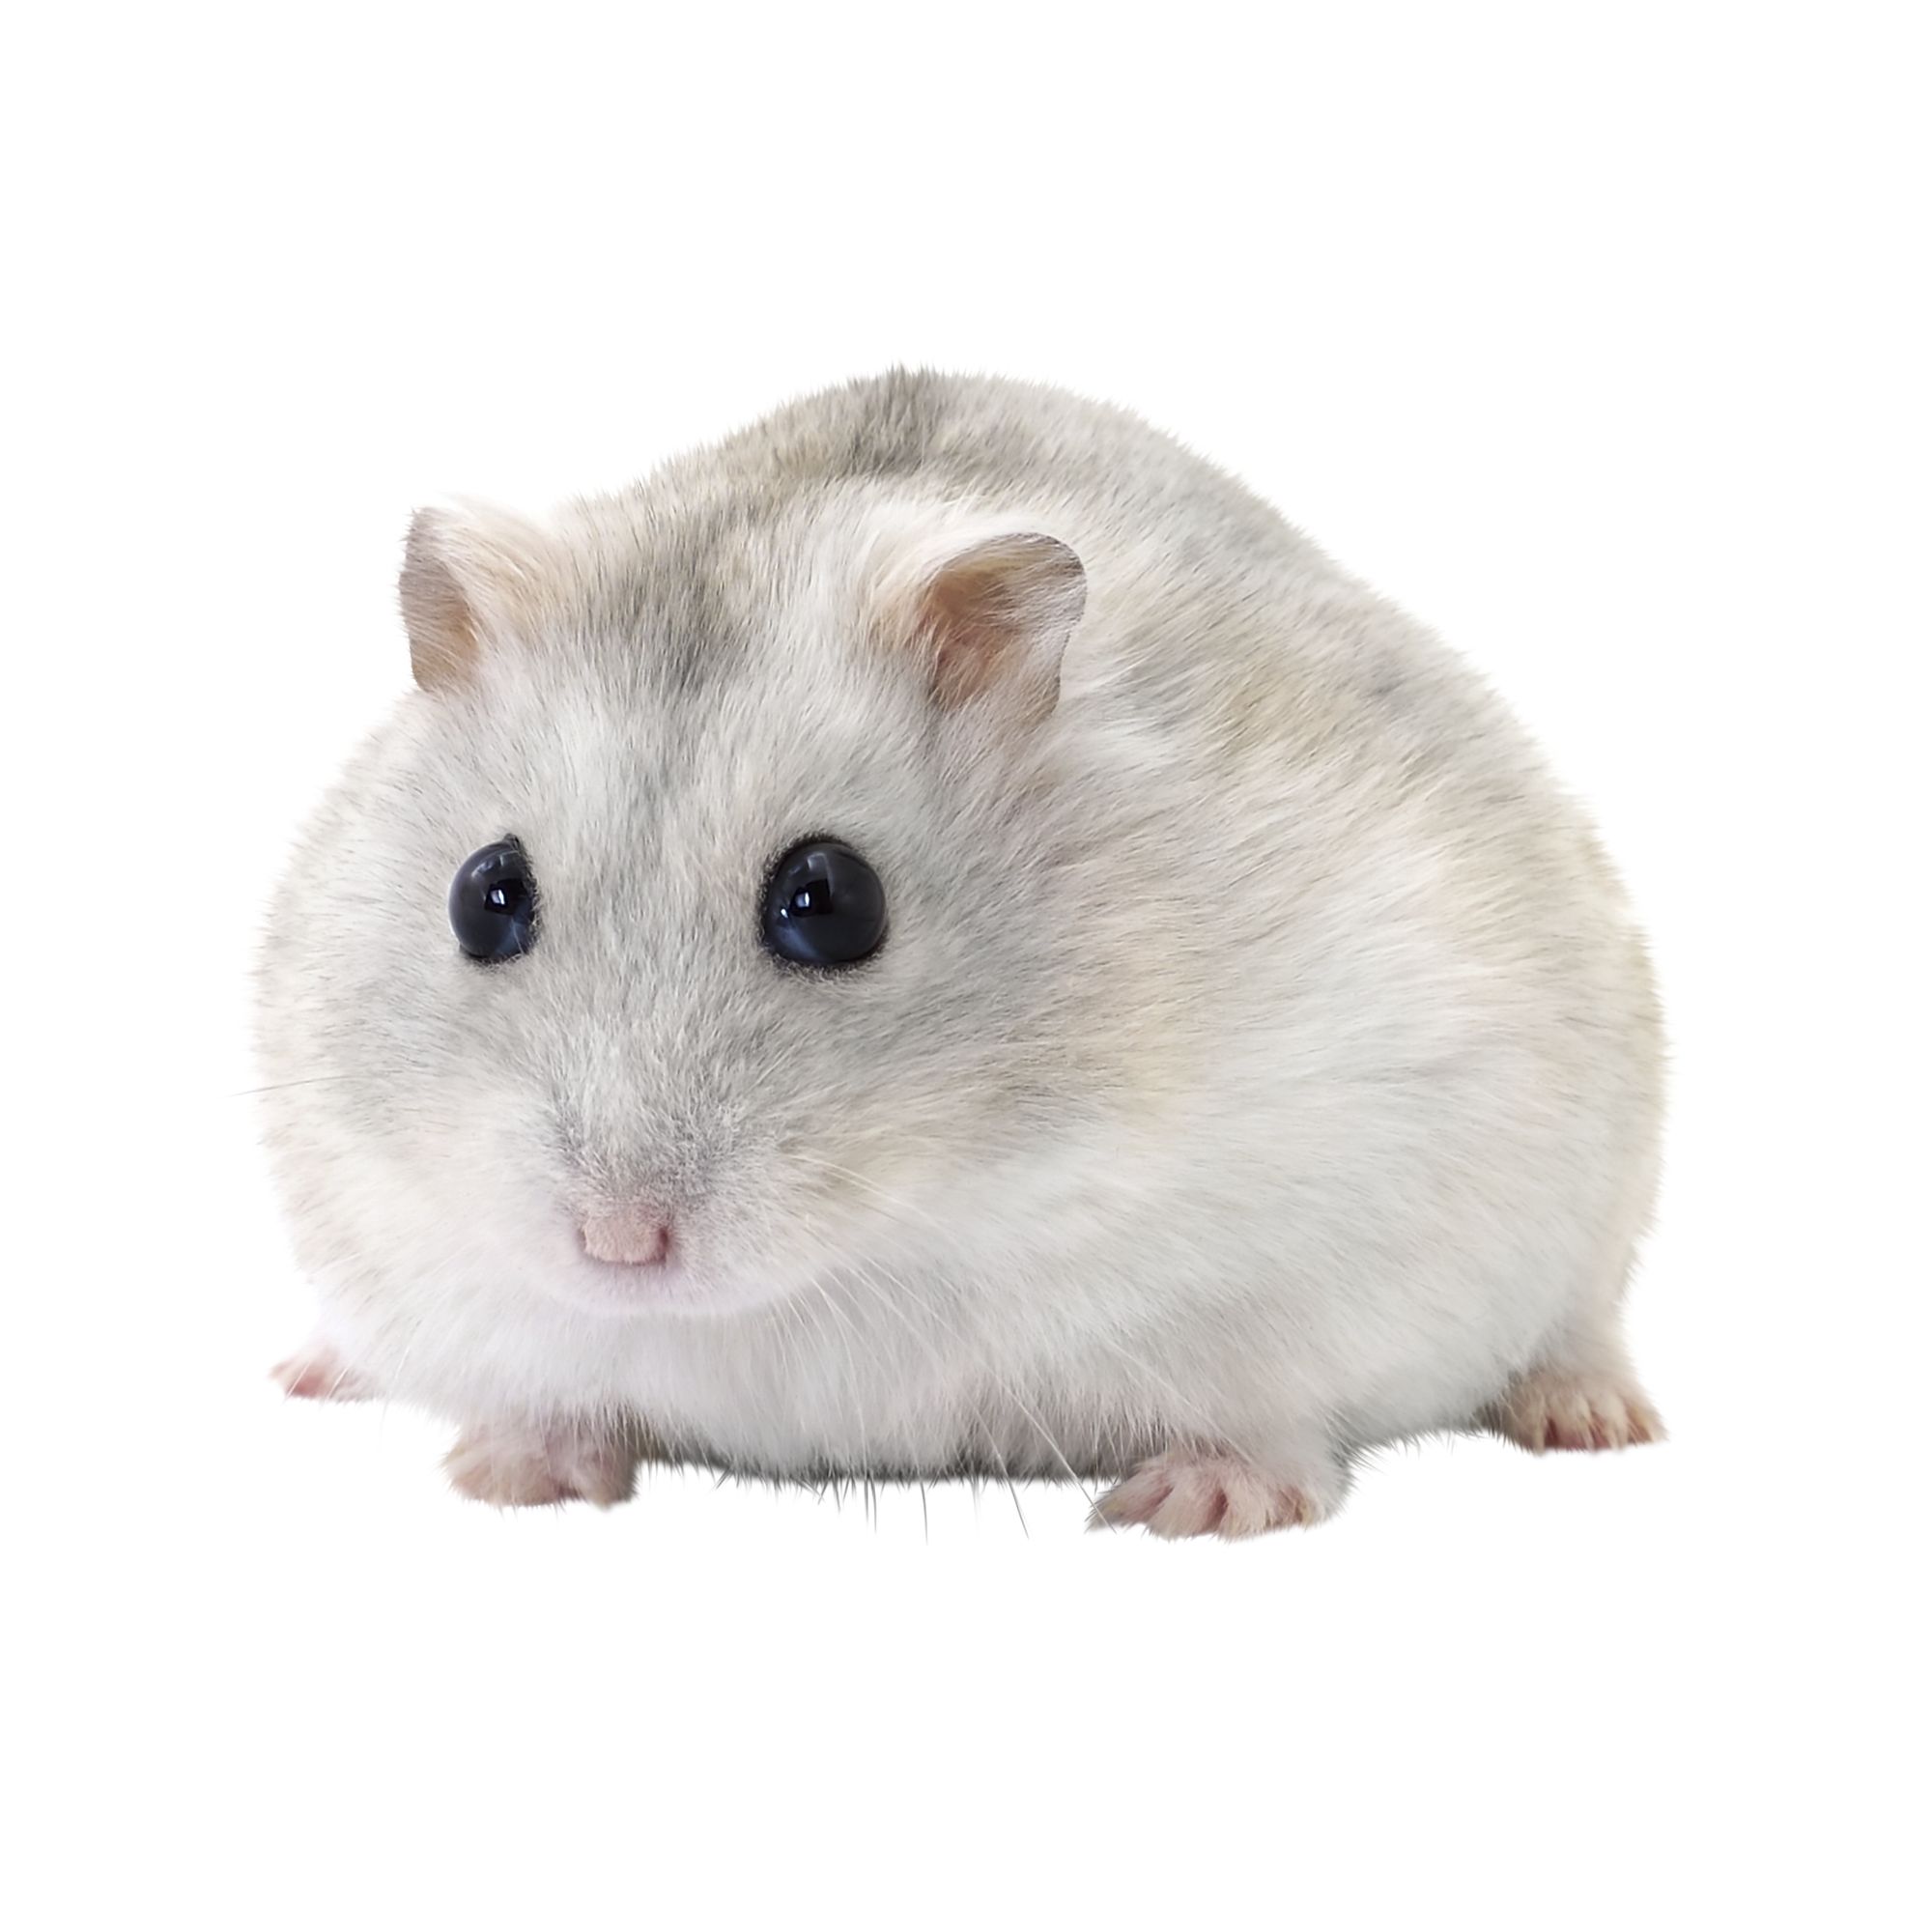 Female Winter White Hamster For Sale Live Small Pets Petsmart